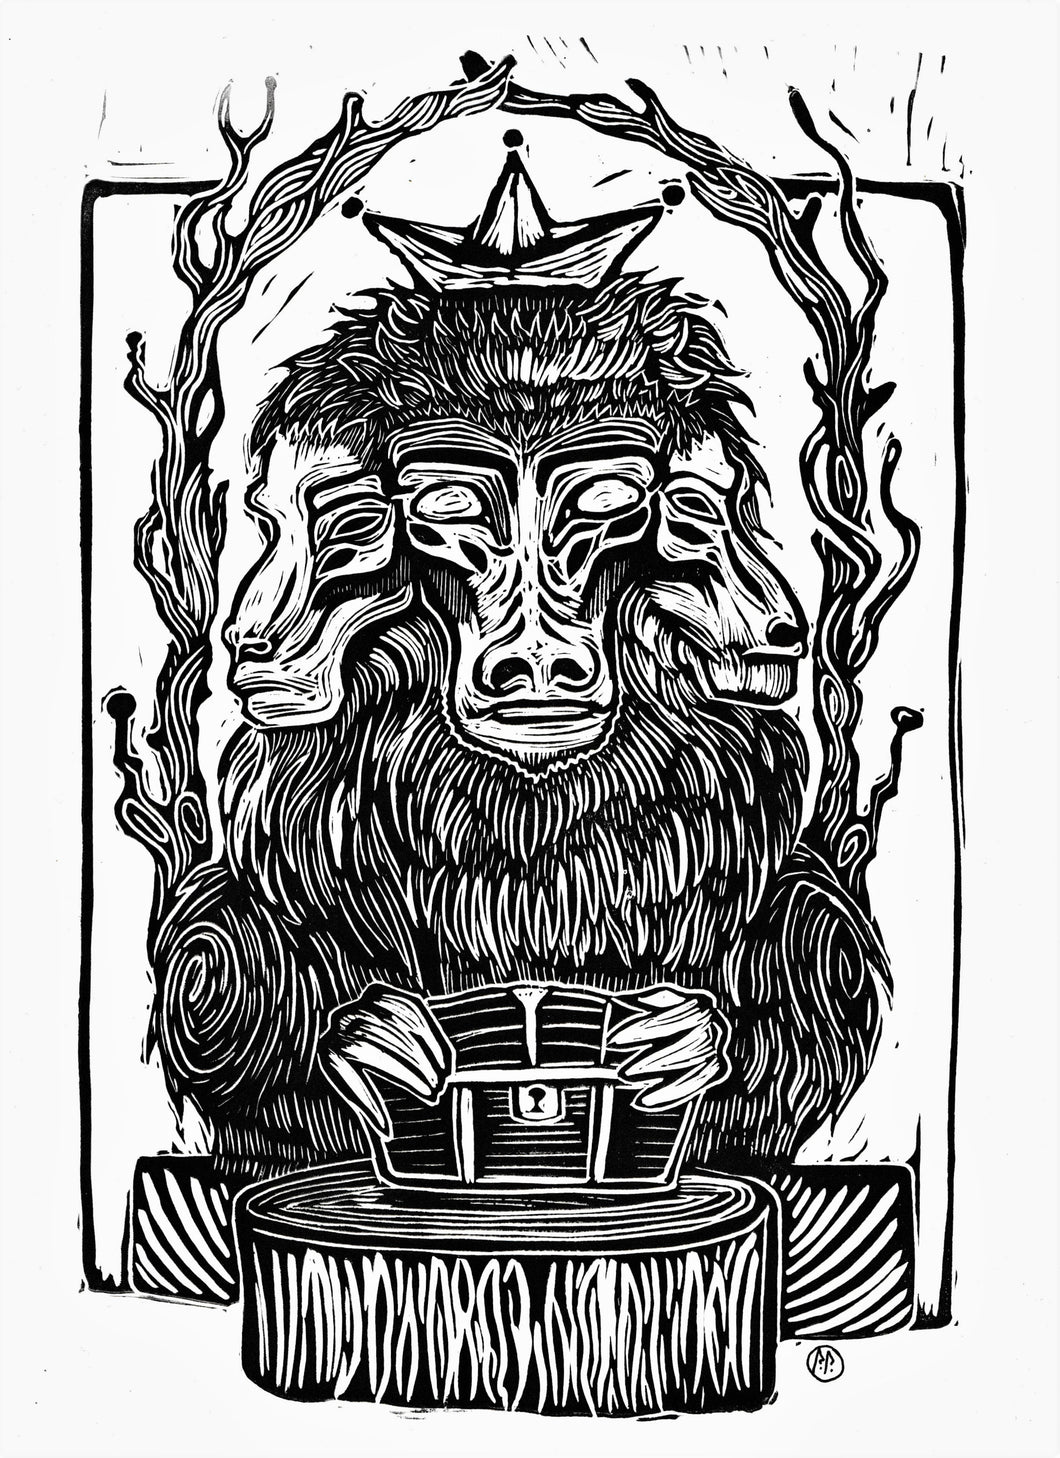 Monkey king of the forest- 3 headed monkey linocut print on paper - original art